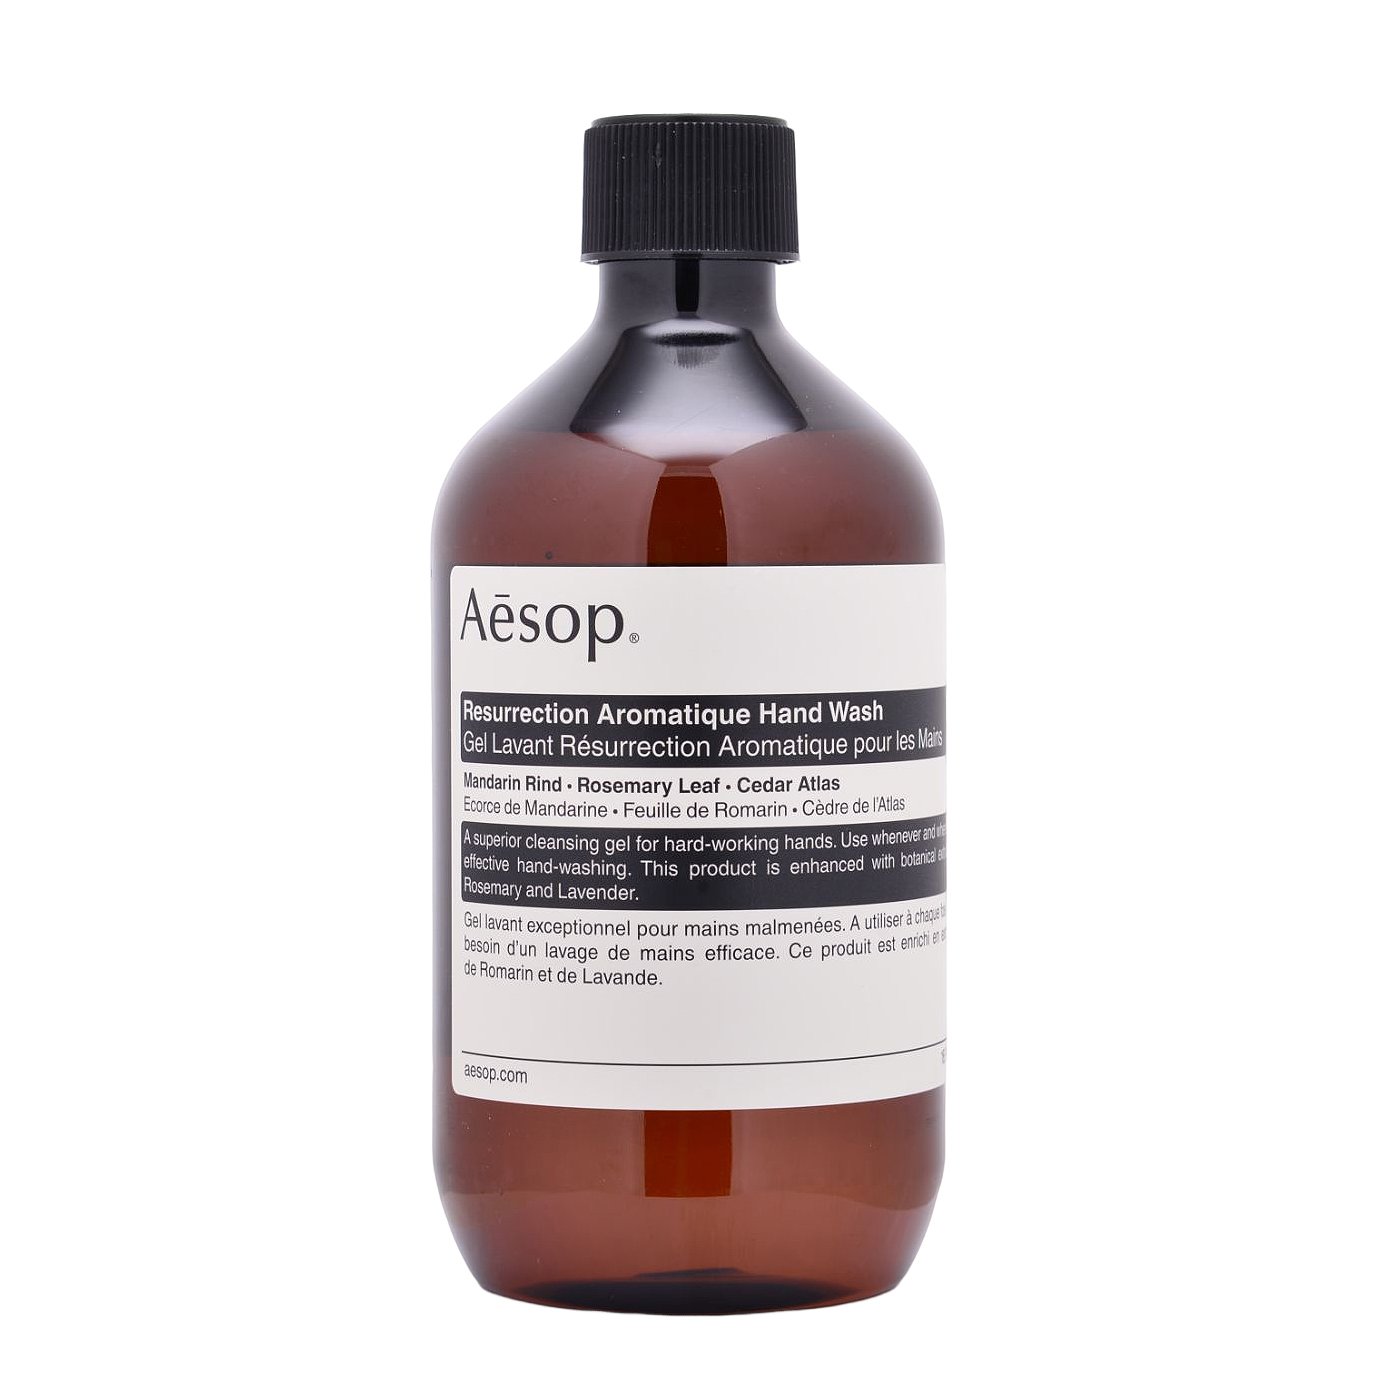 Aesop Resurrection Aromatique Hand Wash Refill Bottle 500ml/16.9fl.oz